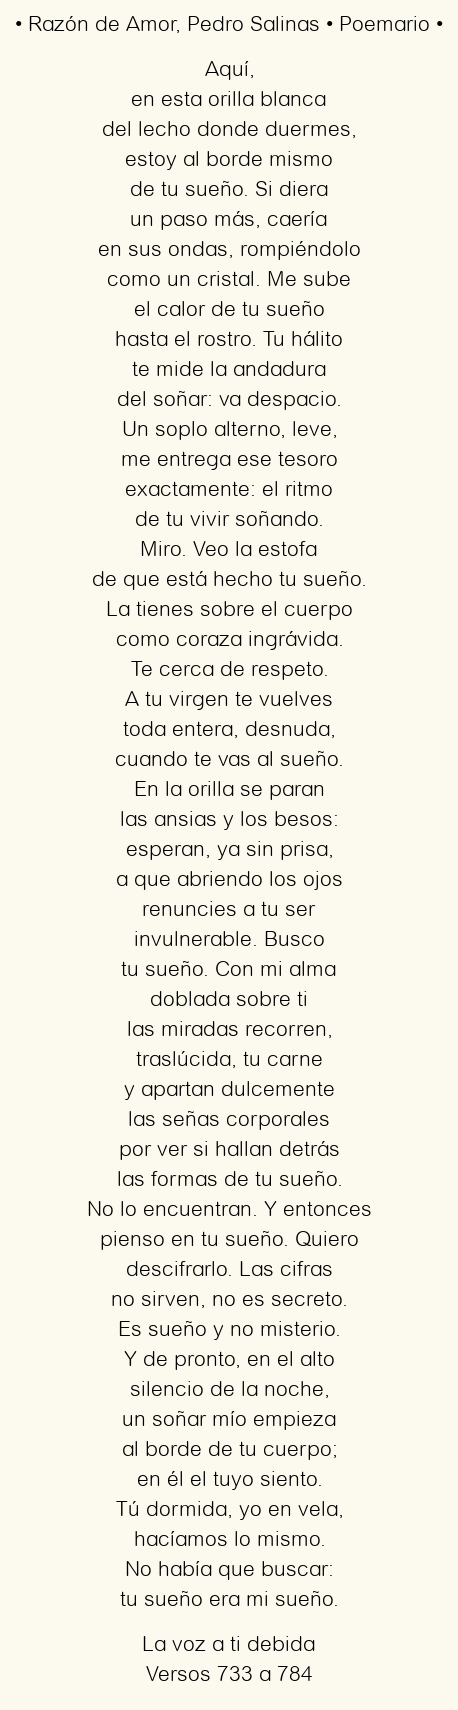 Razón de Amor, por Pedro Salinas